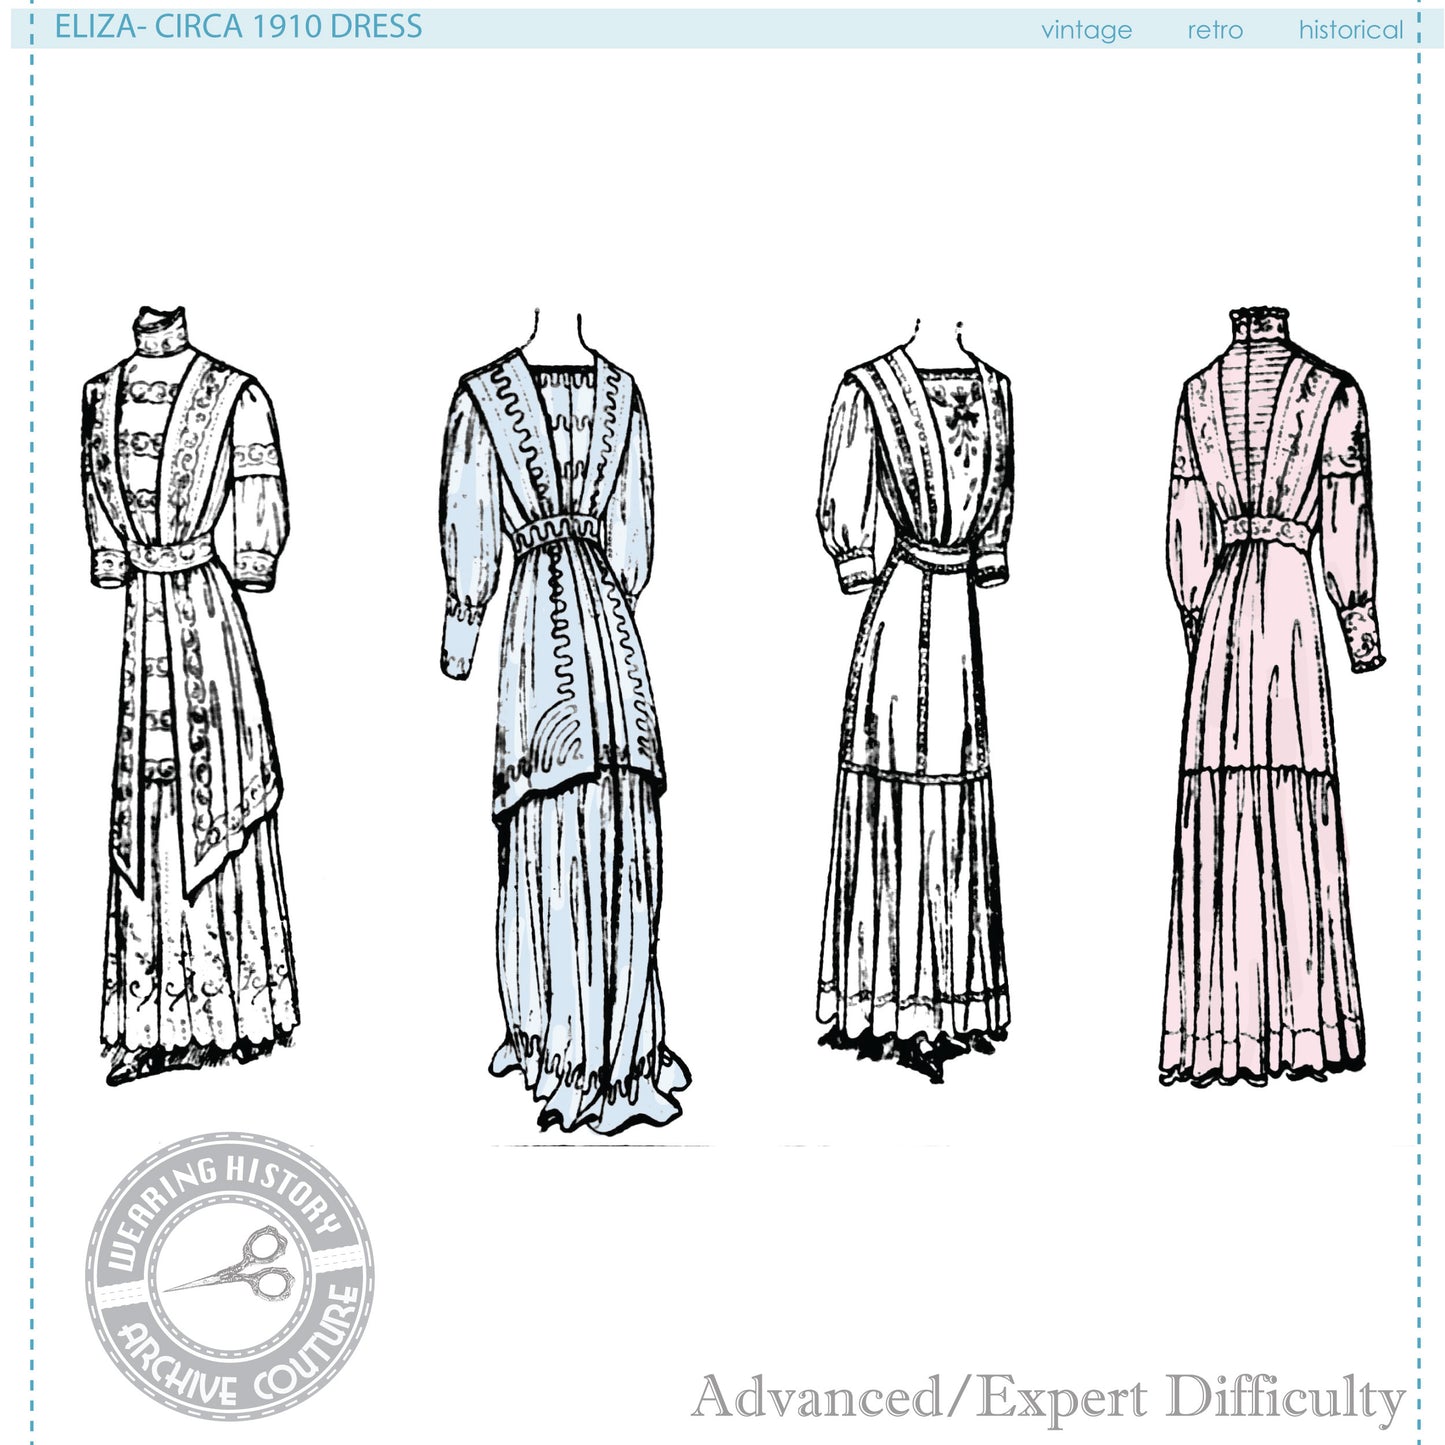 PRINTED PATTERN- Circa 1910 "Eliza" Dress- Bust 36" Waist 26"